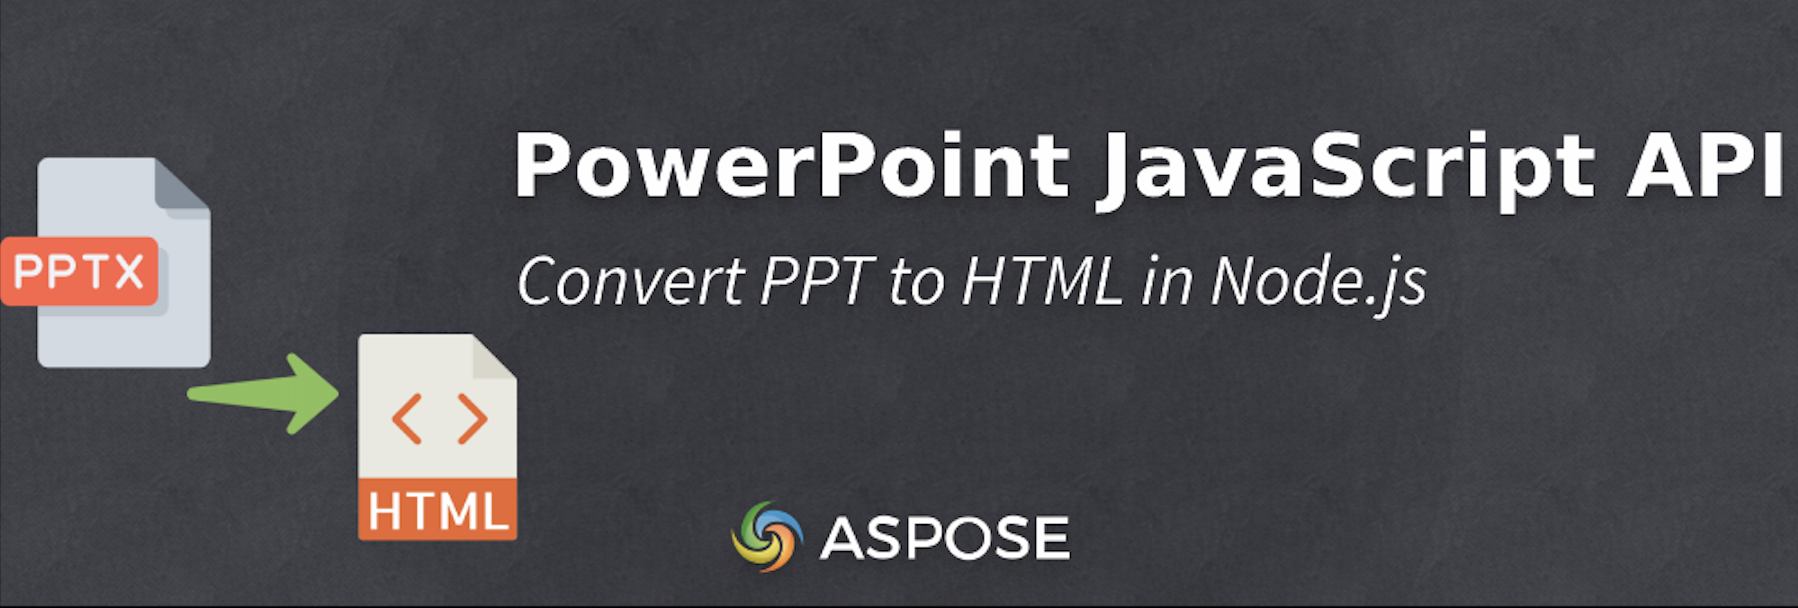 Konvertera PPT till HTML i Node.js - PowerPoint JavaScript API